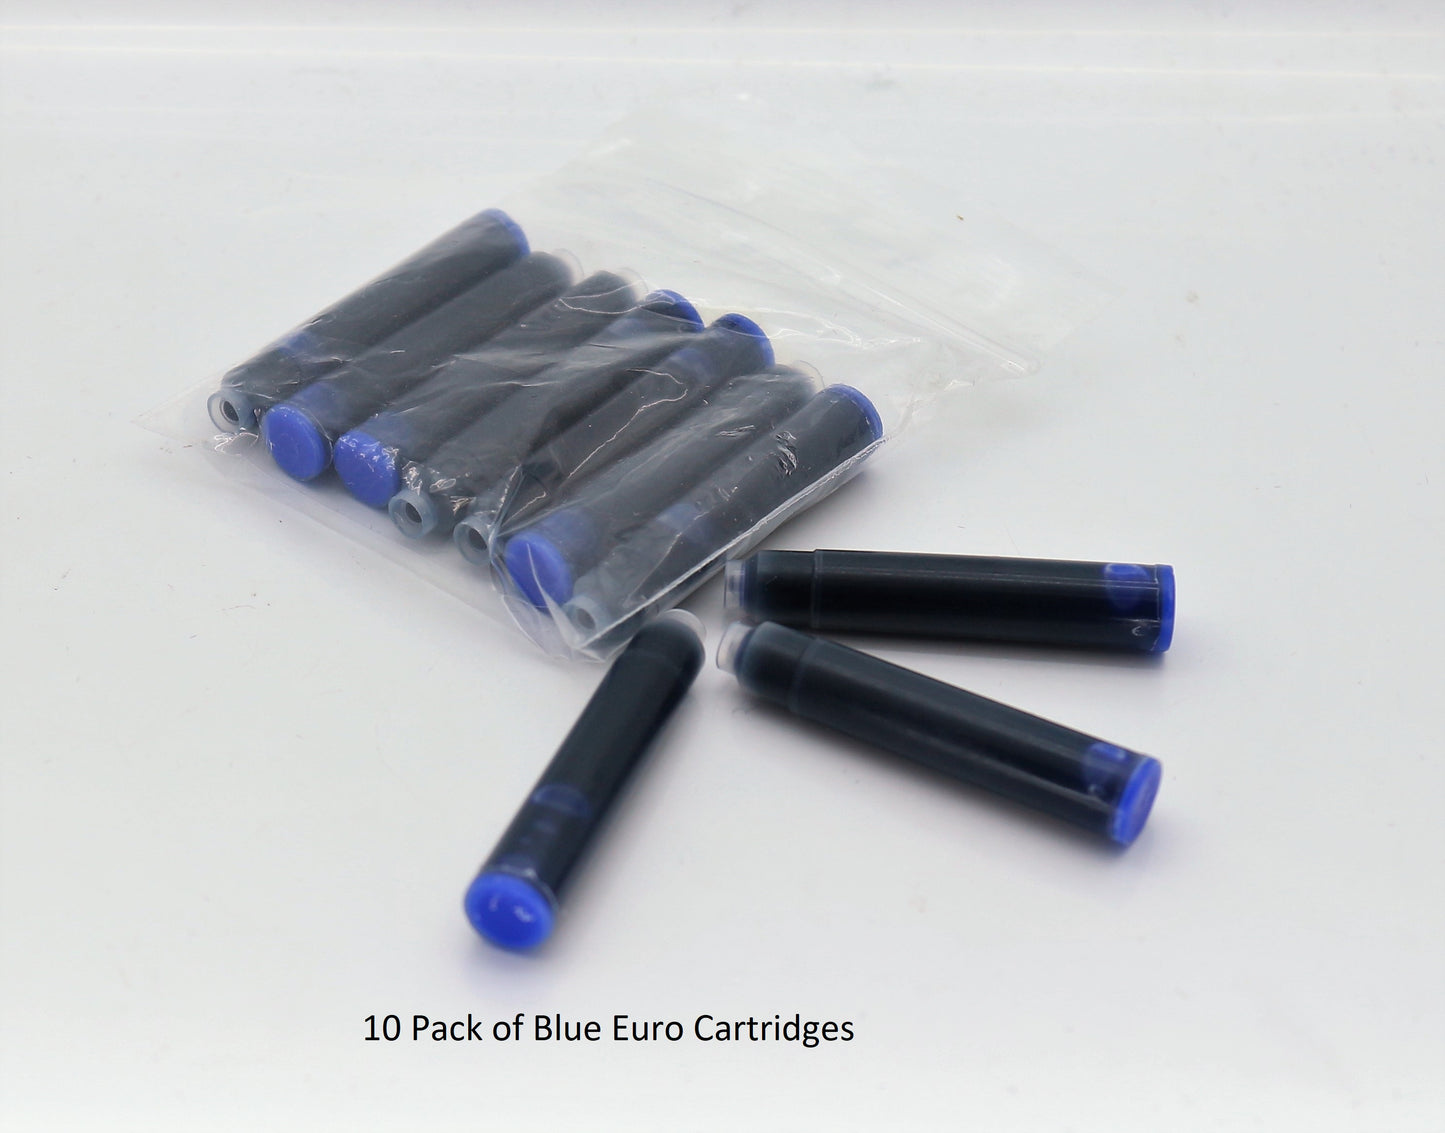 10 pack of blue Euro cartridges